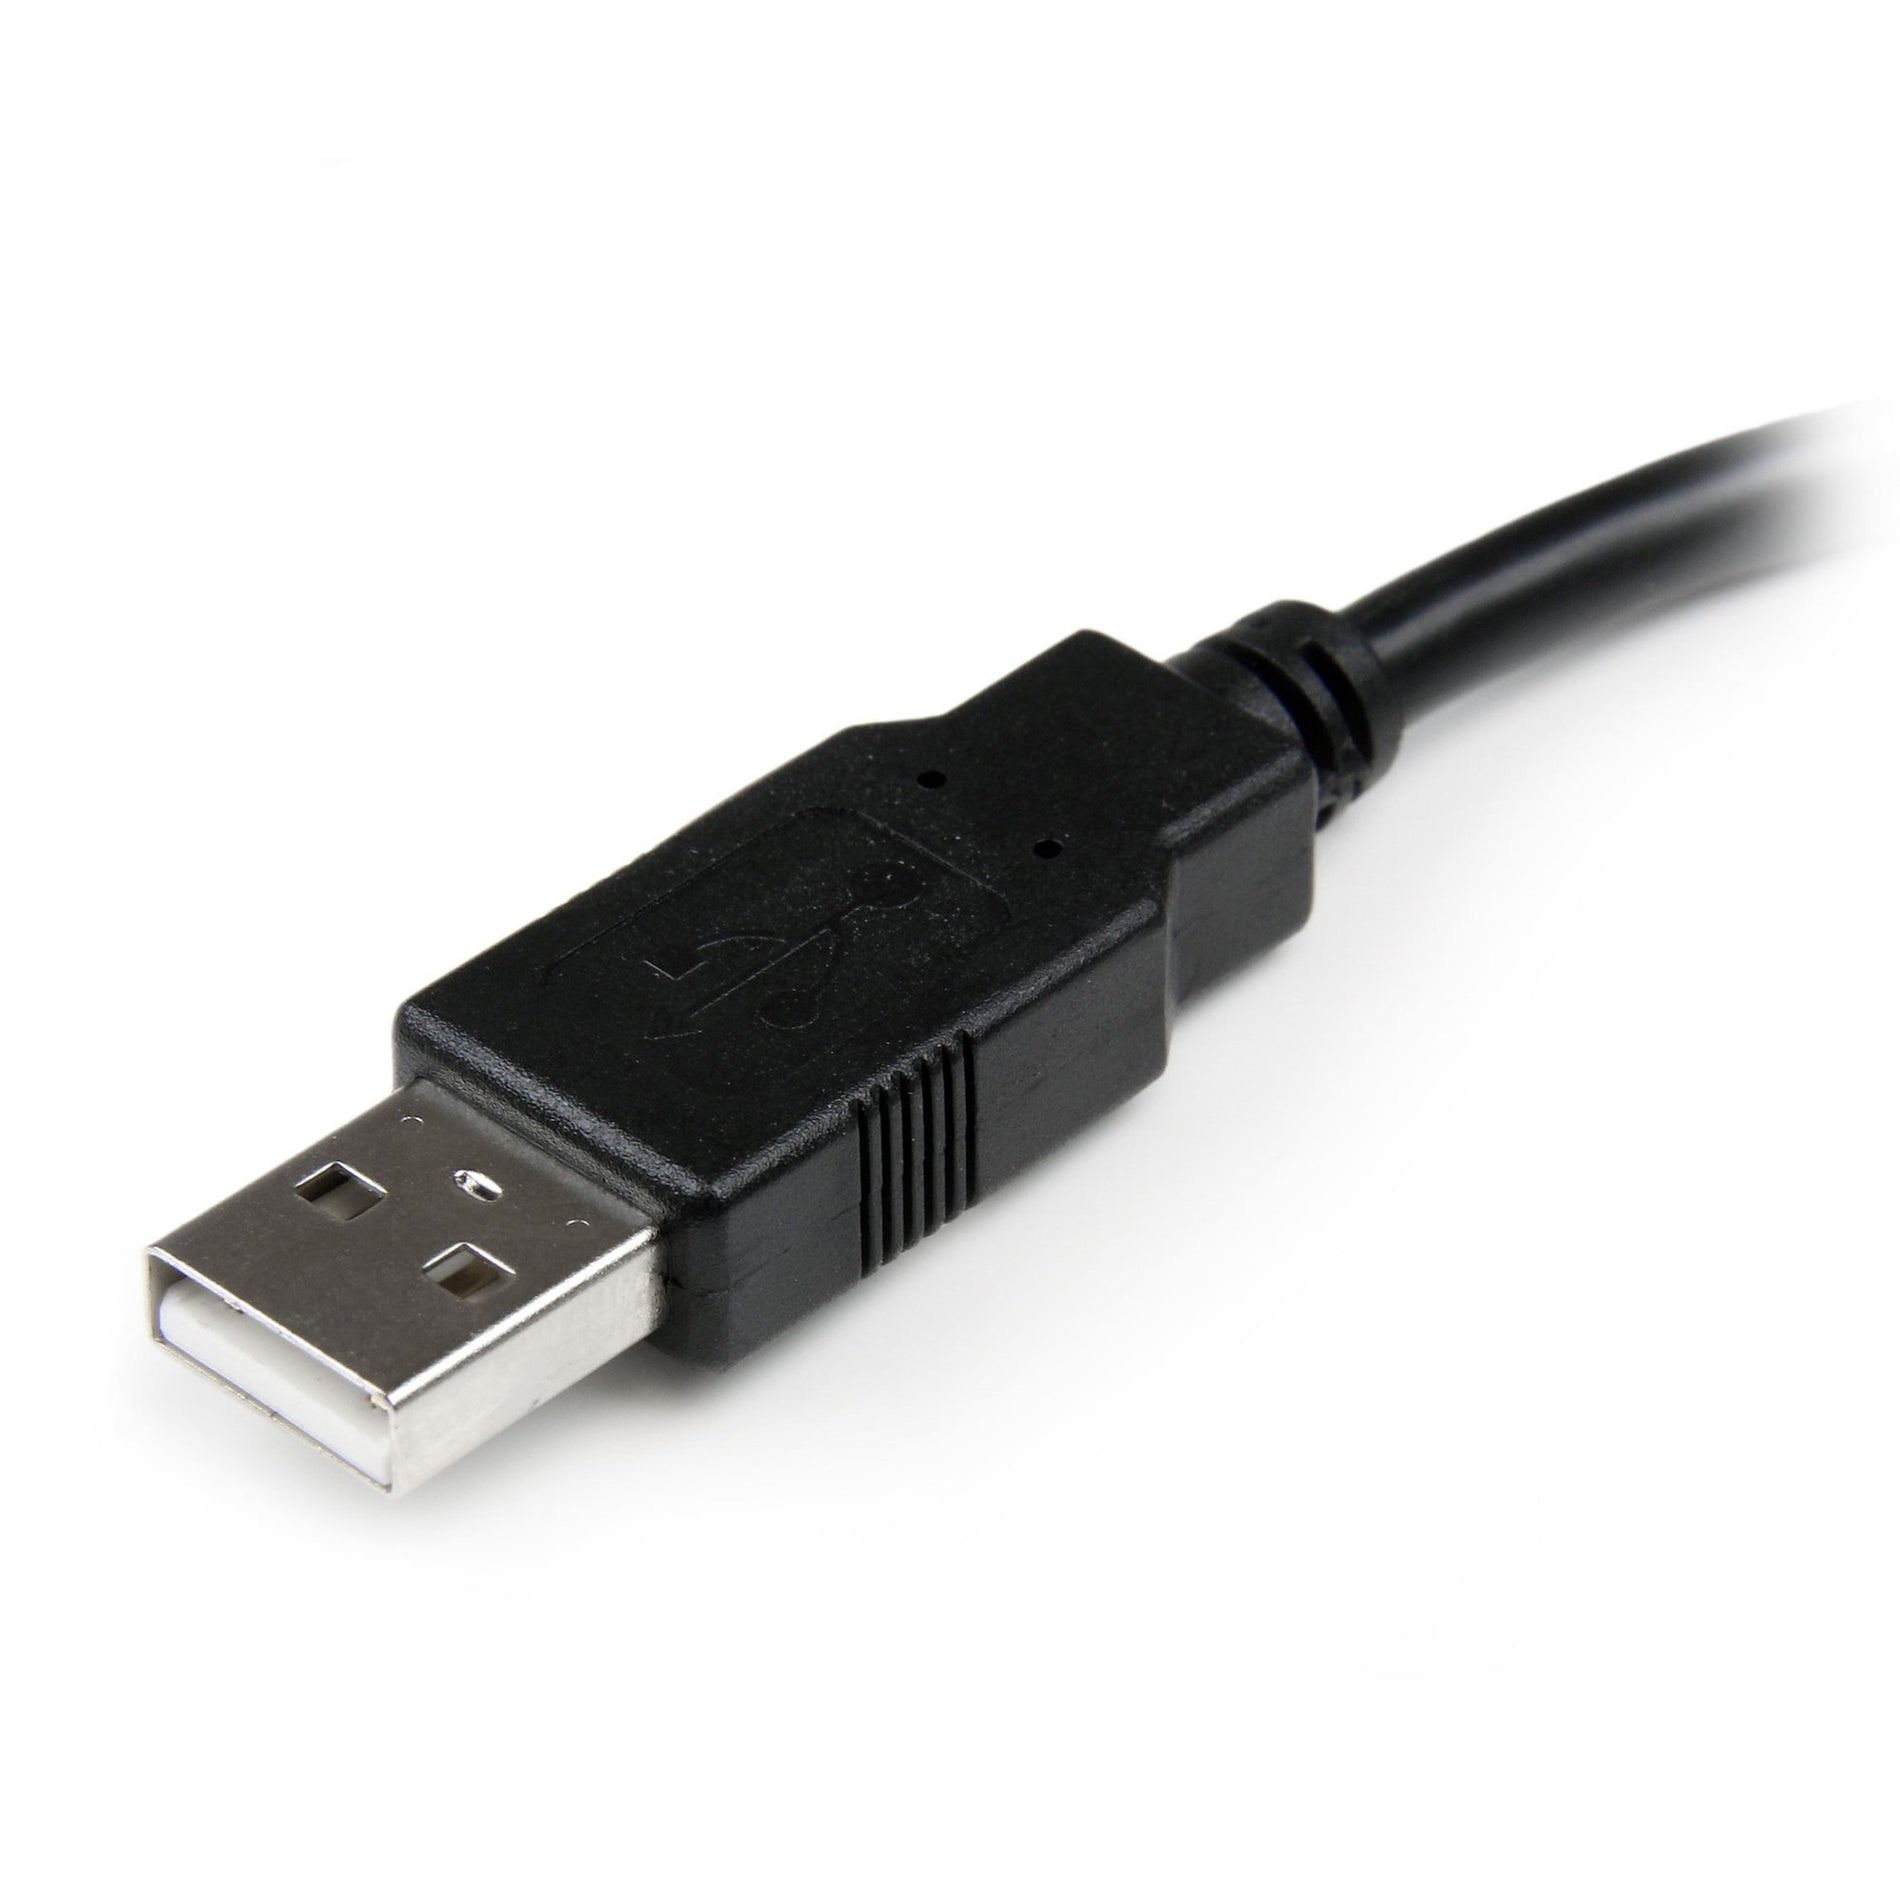 StarTech.com كبل تمديد USB 2.0 بطول 6 بوصات A to A - ذكر/أنثى، كبل نقل البيانات